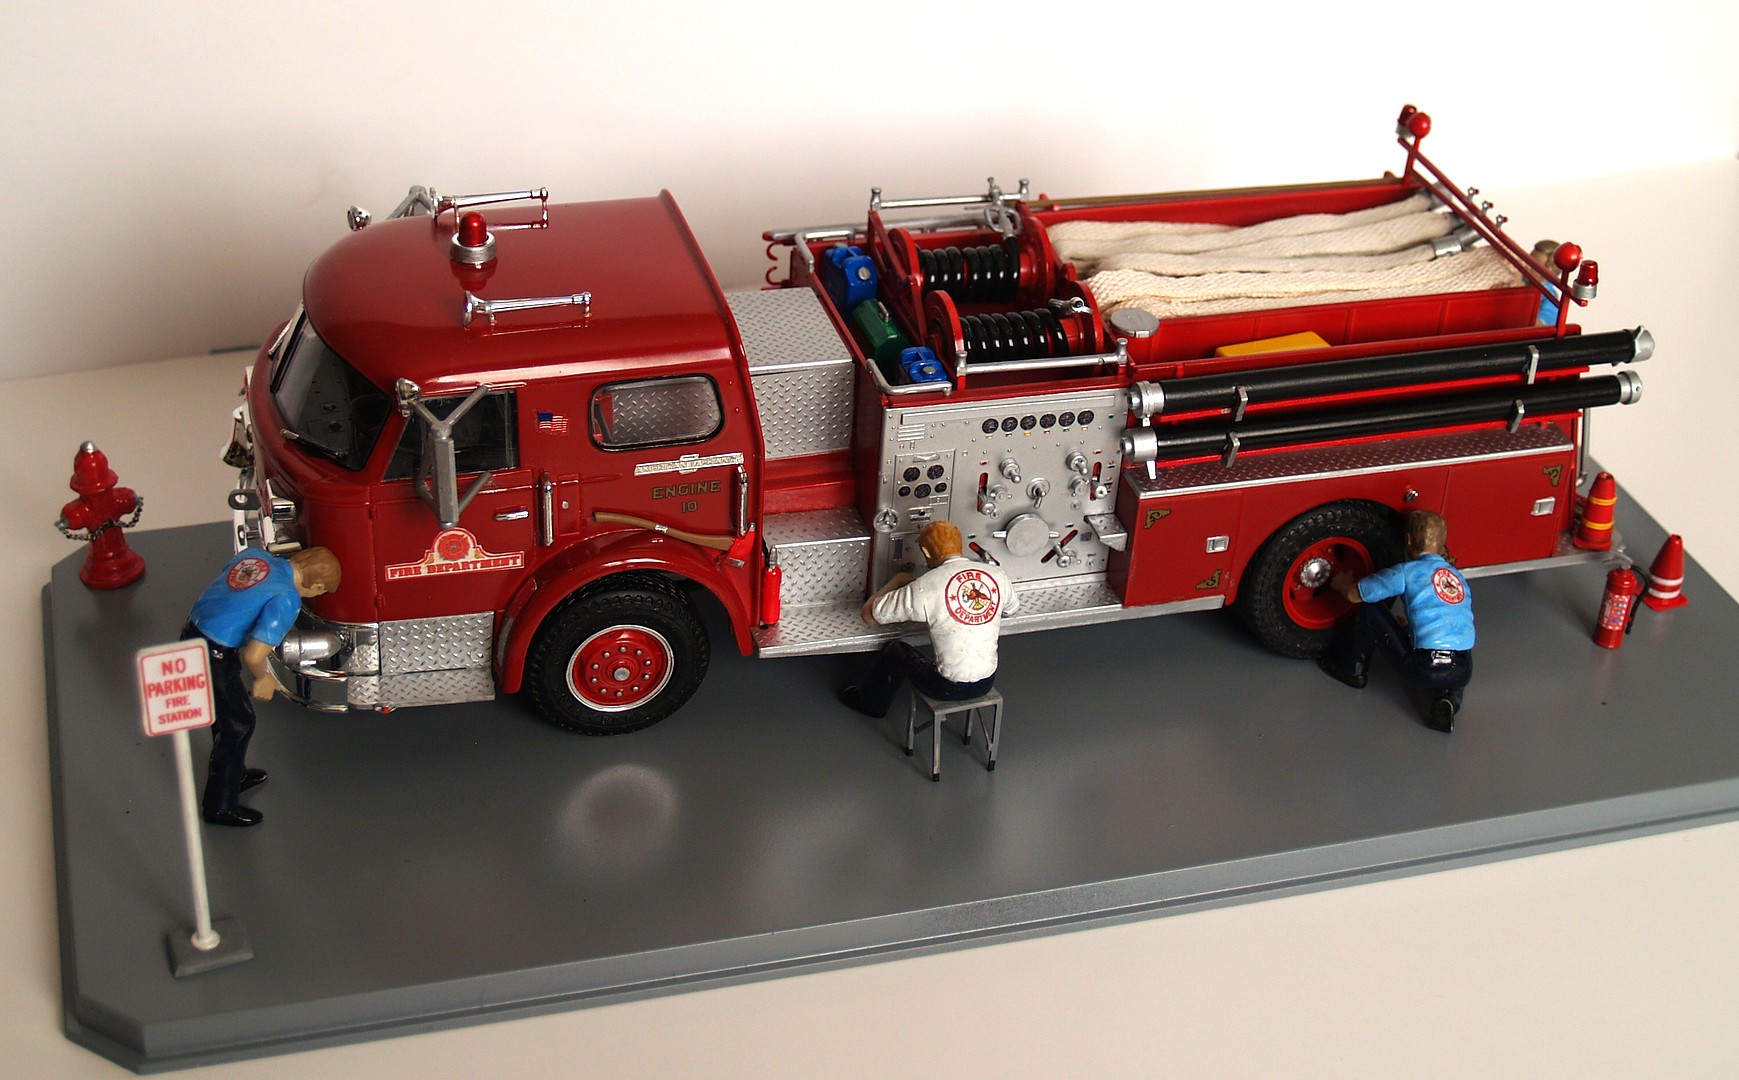 AMT 1:25 American LaFrance Pumper Fire Truck Model Kit AMT1053 